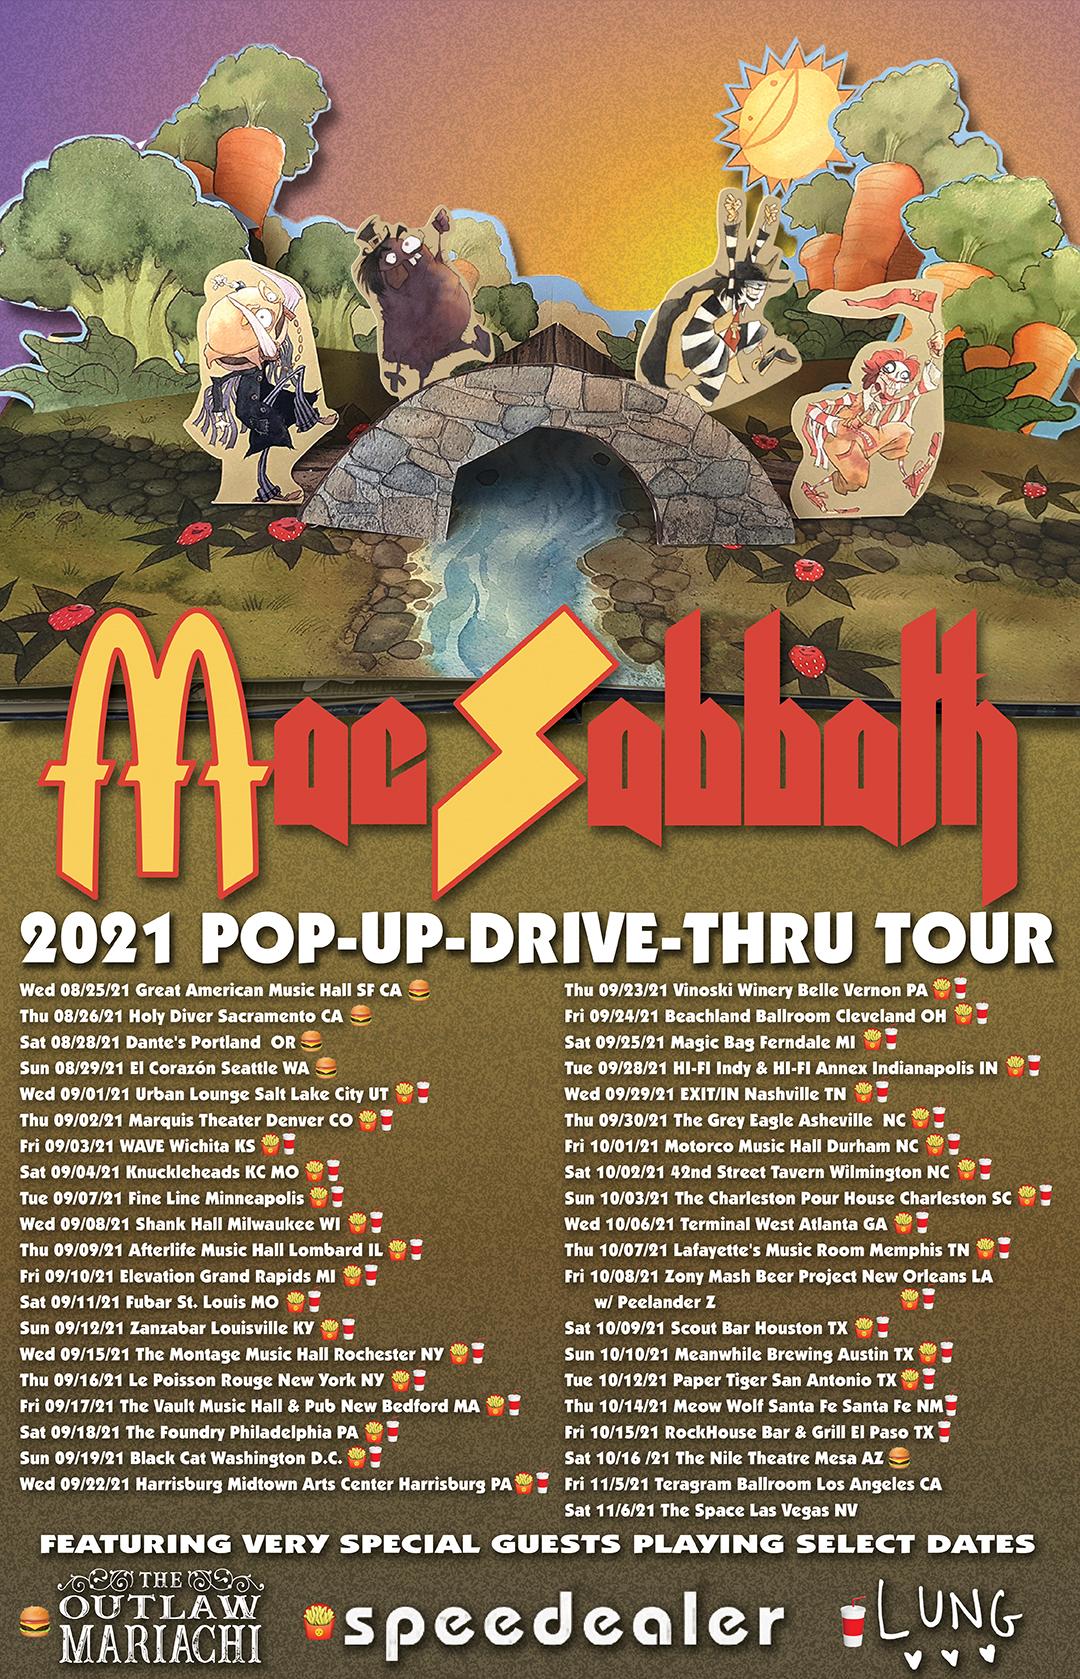 MAC SABBATH Brings 2021 Pop-Up-Drive-Thru Tour to Ravenous Fans Across America Beginning Late Summer